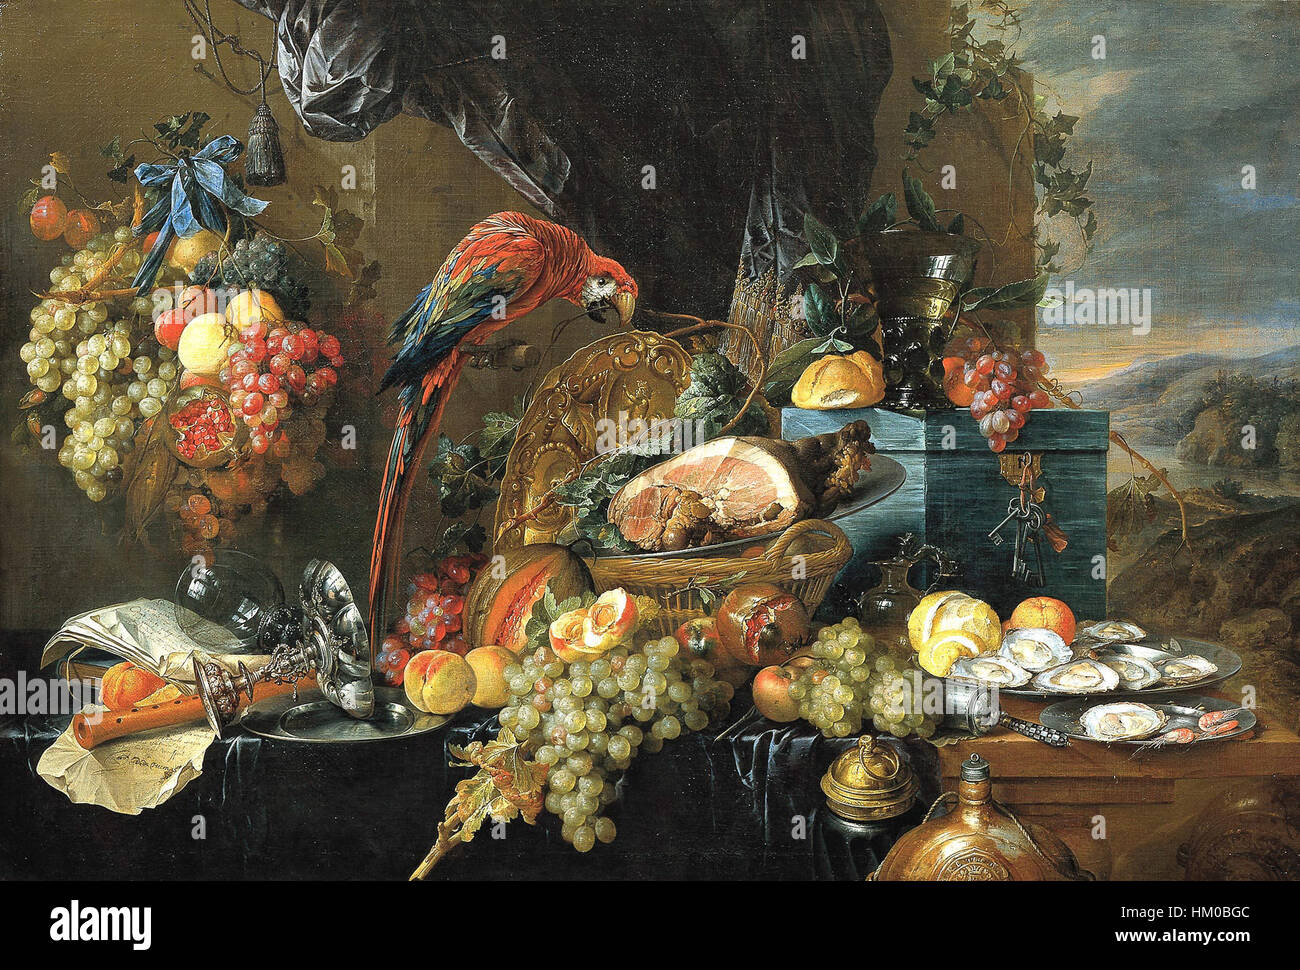 Heem, Jan Davidsz. de - una ricca tavola apparecchiata con pappagalli - c. 1650 Foto Stock